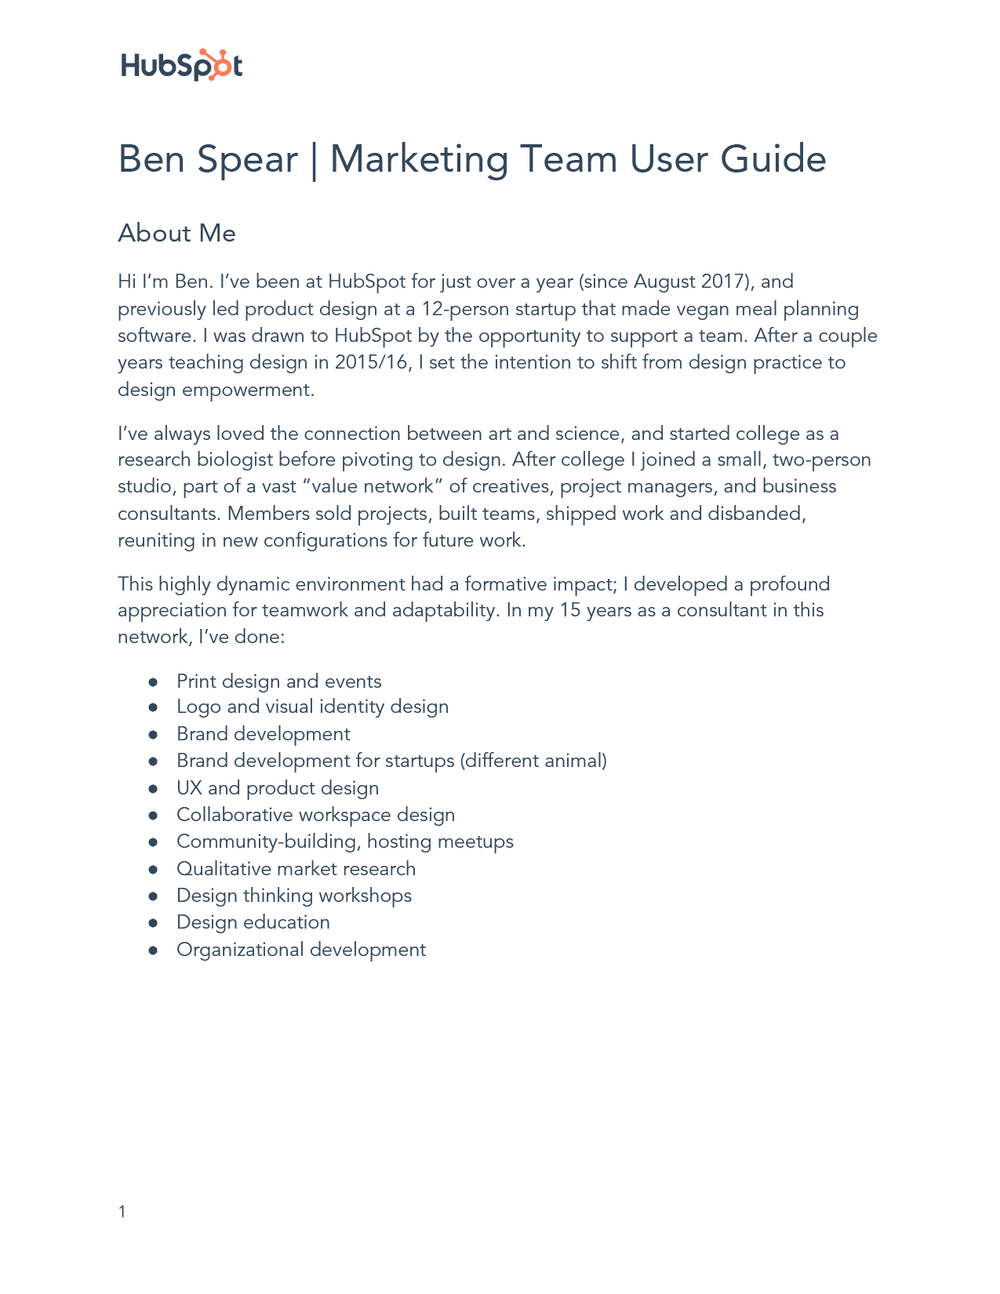 Ben+Spear+_+Marketing+Team+User+Guide-1.png